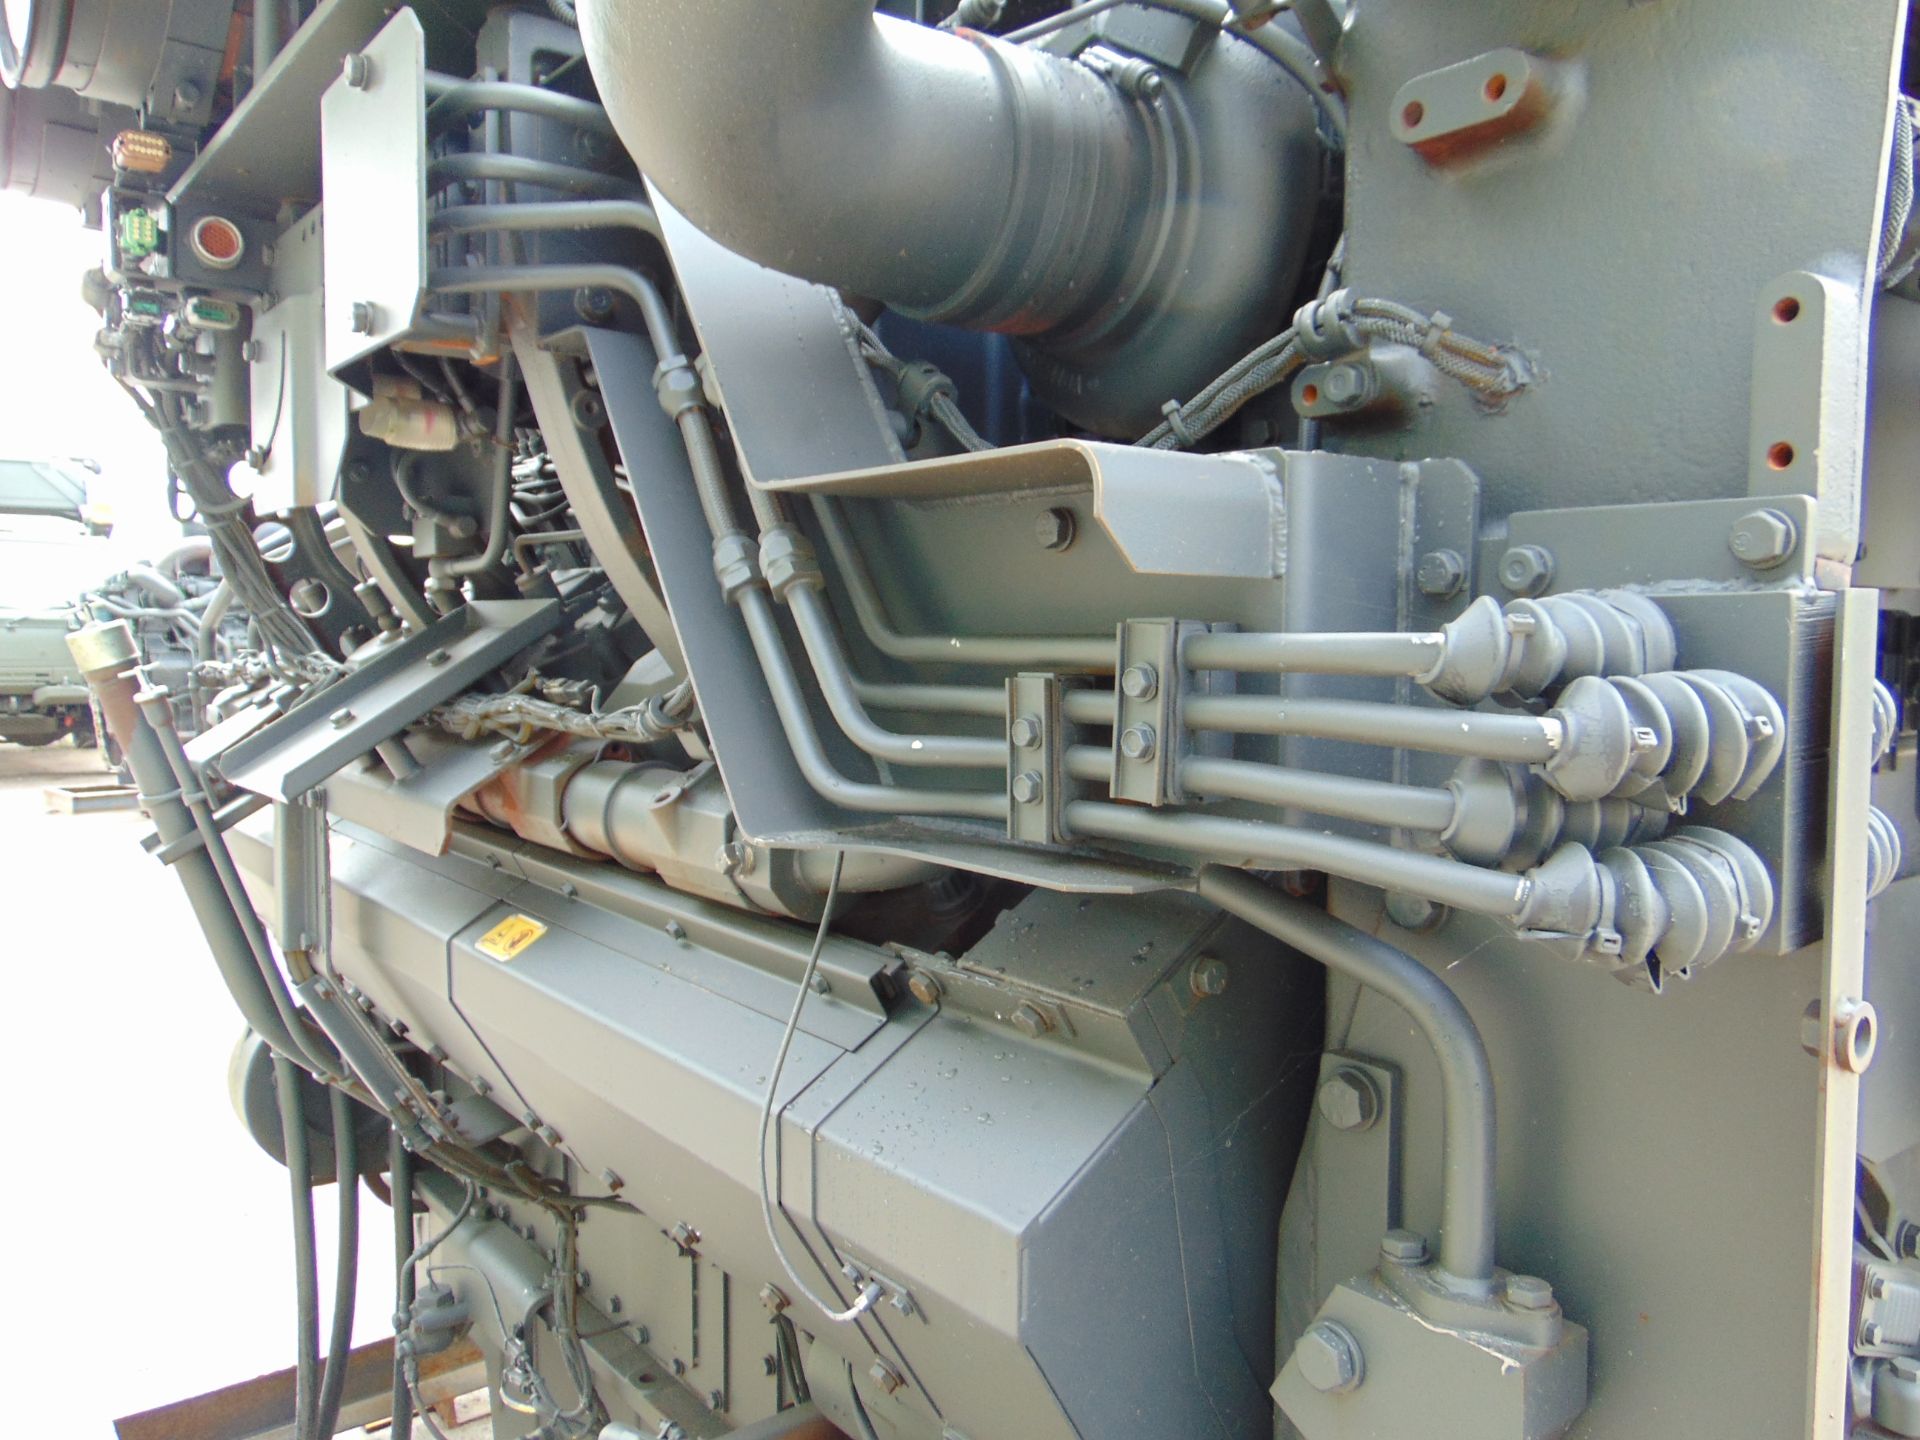 Factory Reconditioned Komatsu SA12V170E-2 V12 Turbo Diesel Engine Suits Komatsu D575A Bulldozer - Image 25 of 29